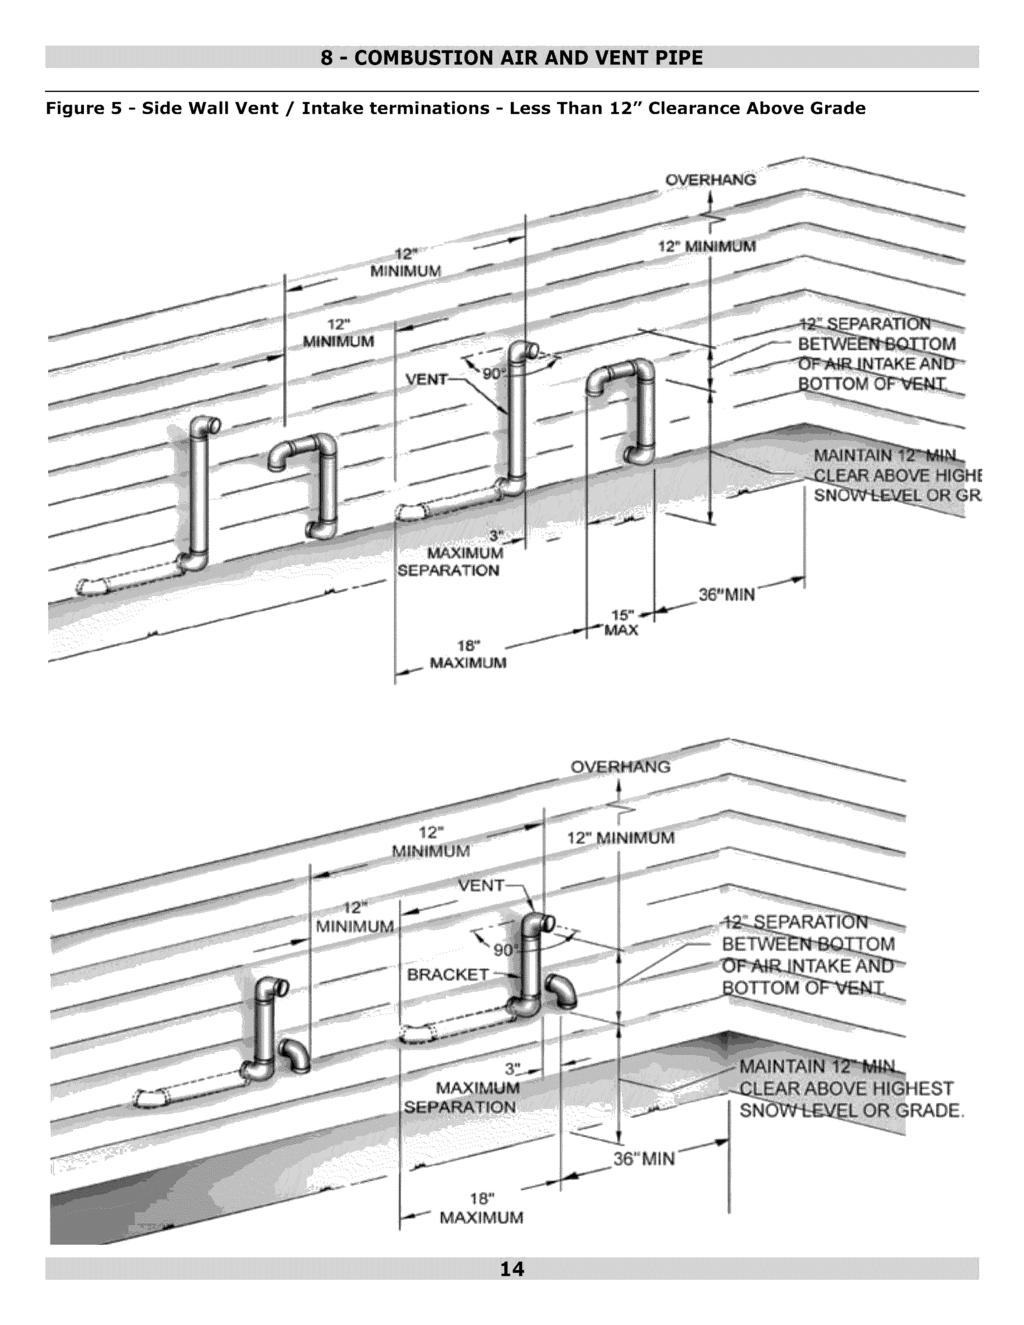 Figure 5 - Side Wall Vent / Intake